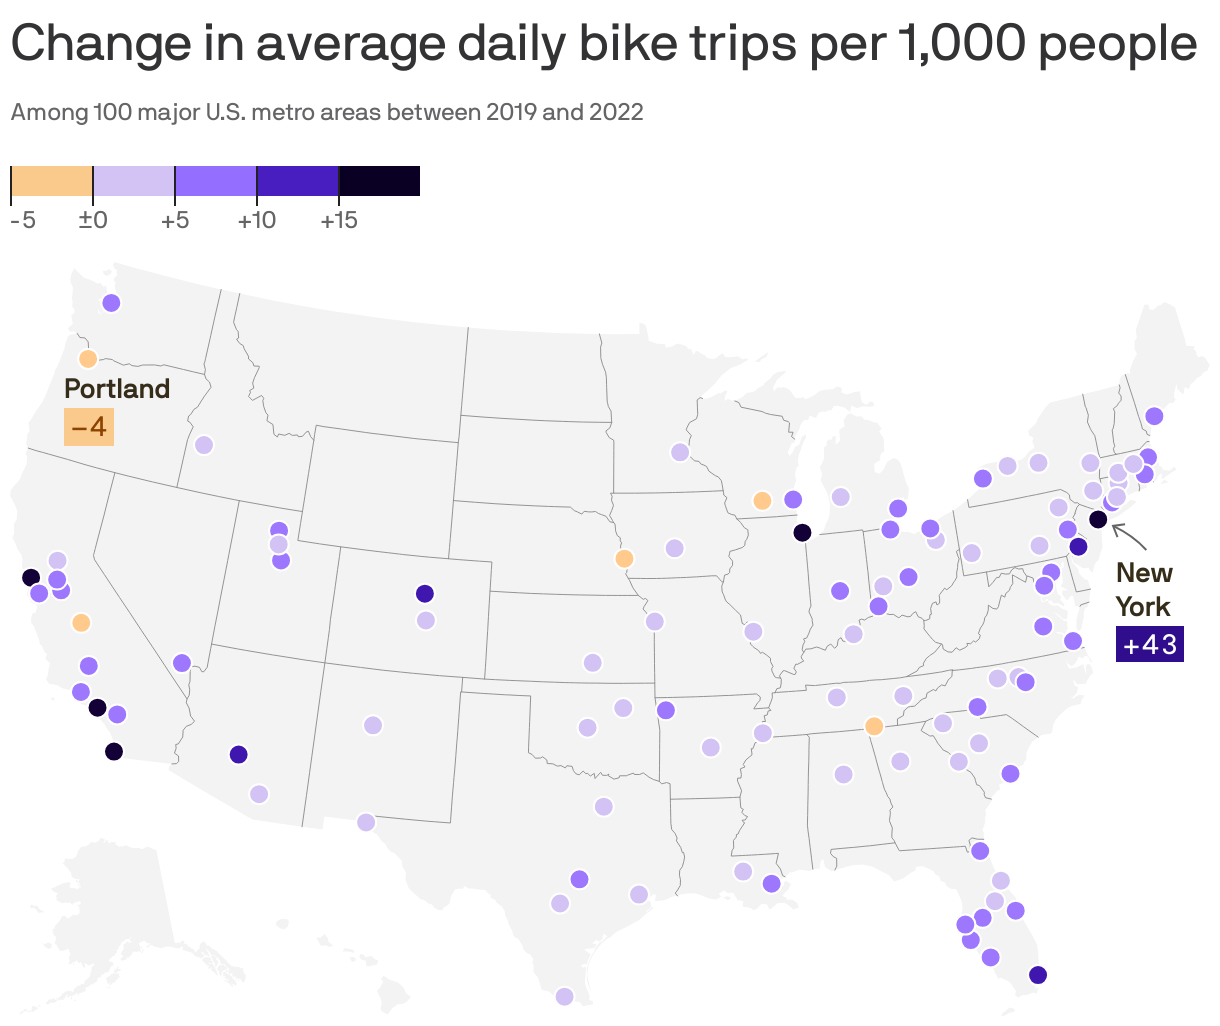 Change in average daily bike trips per 1,000 people